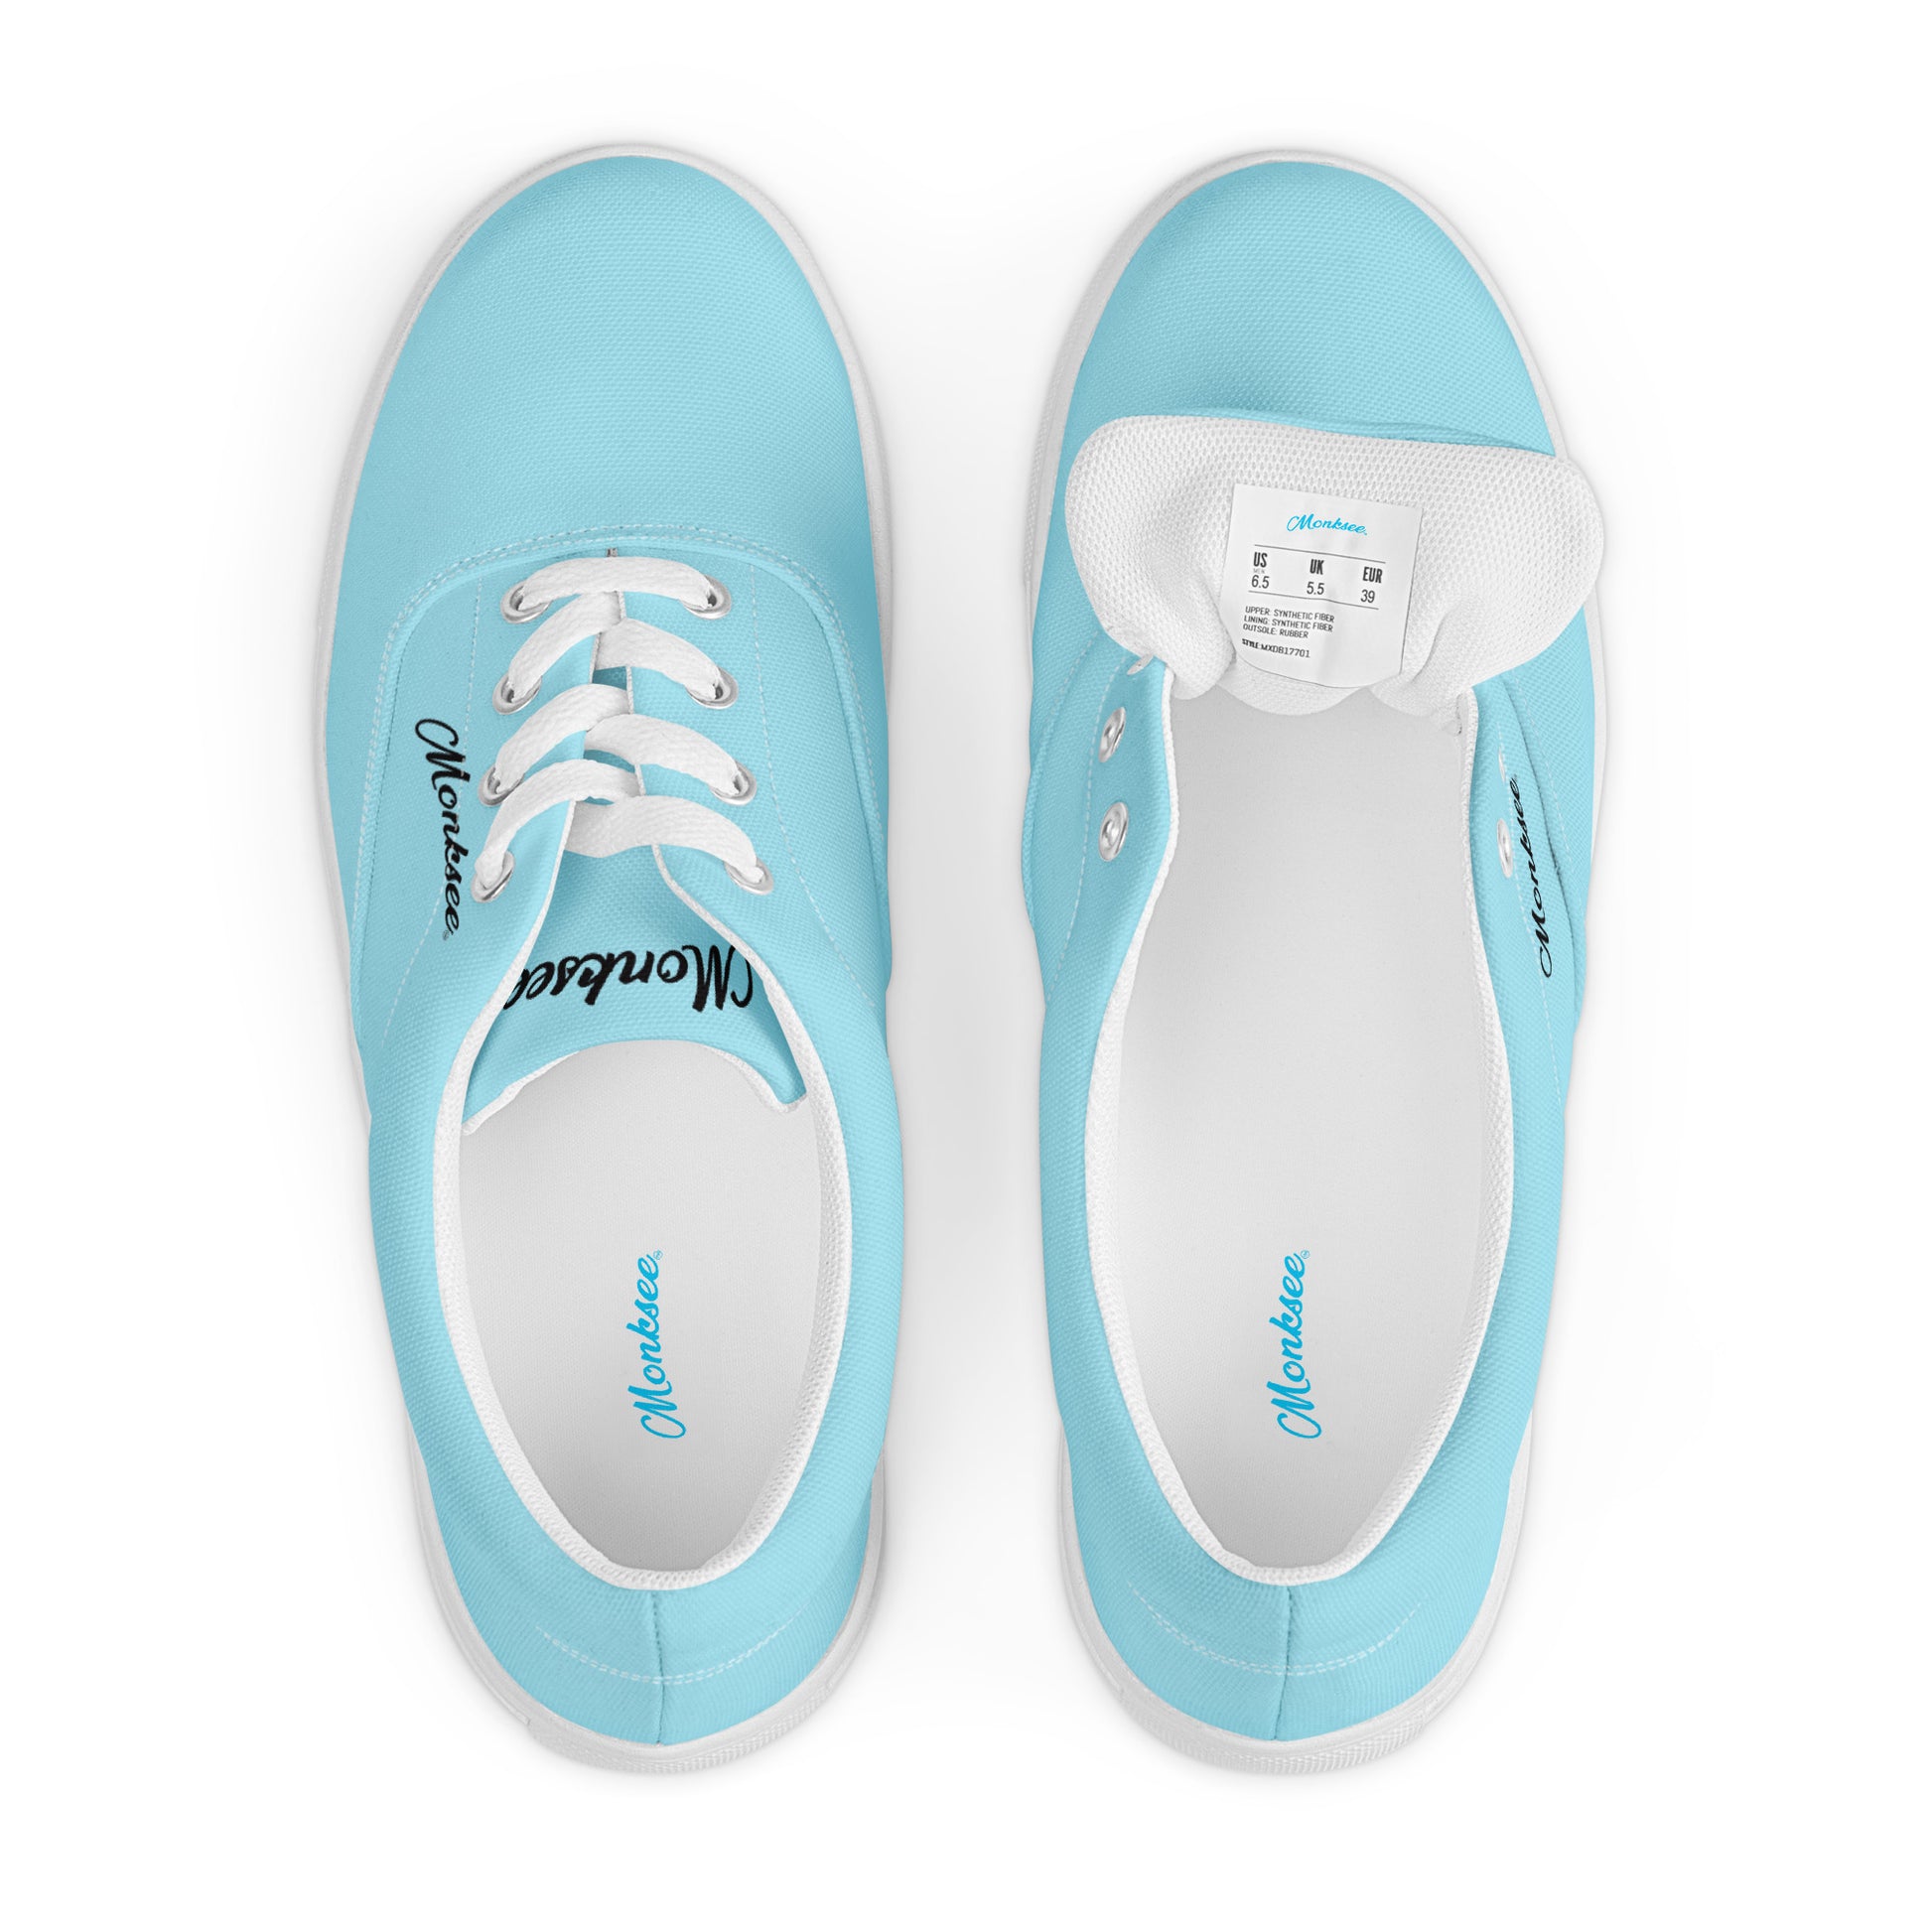 Stoked blue - Men’s Canvas shoes.